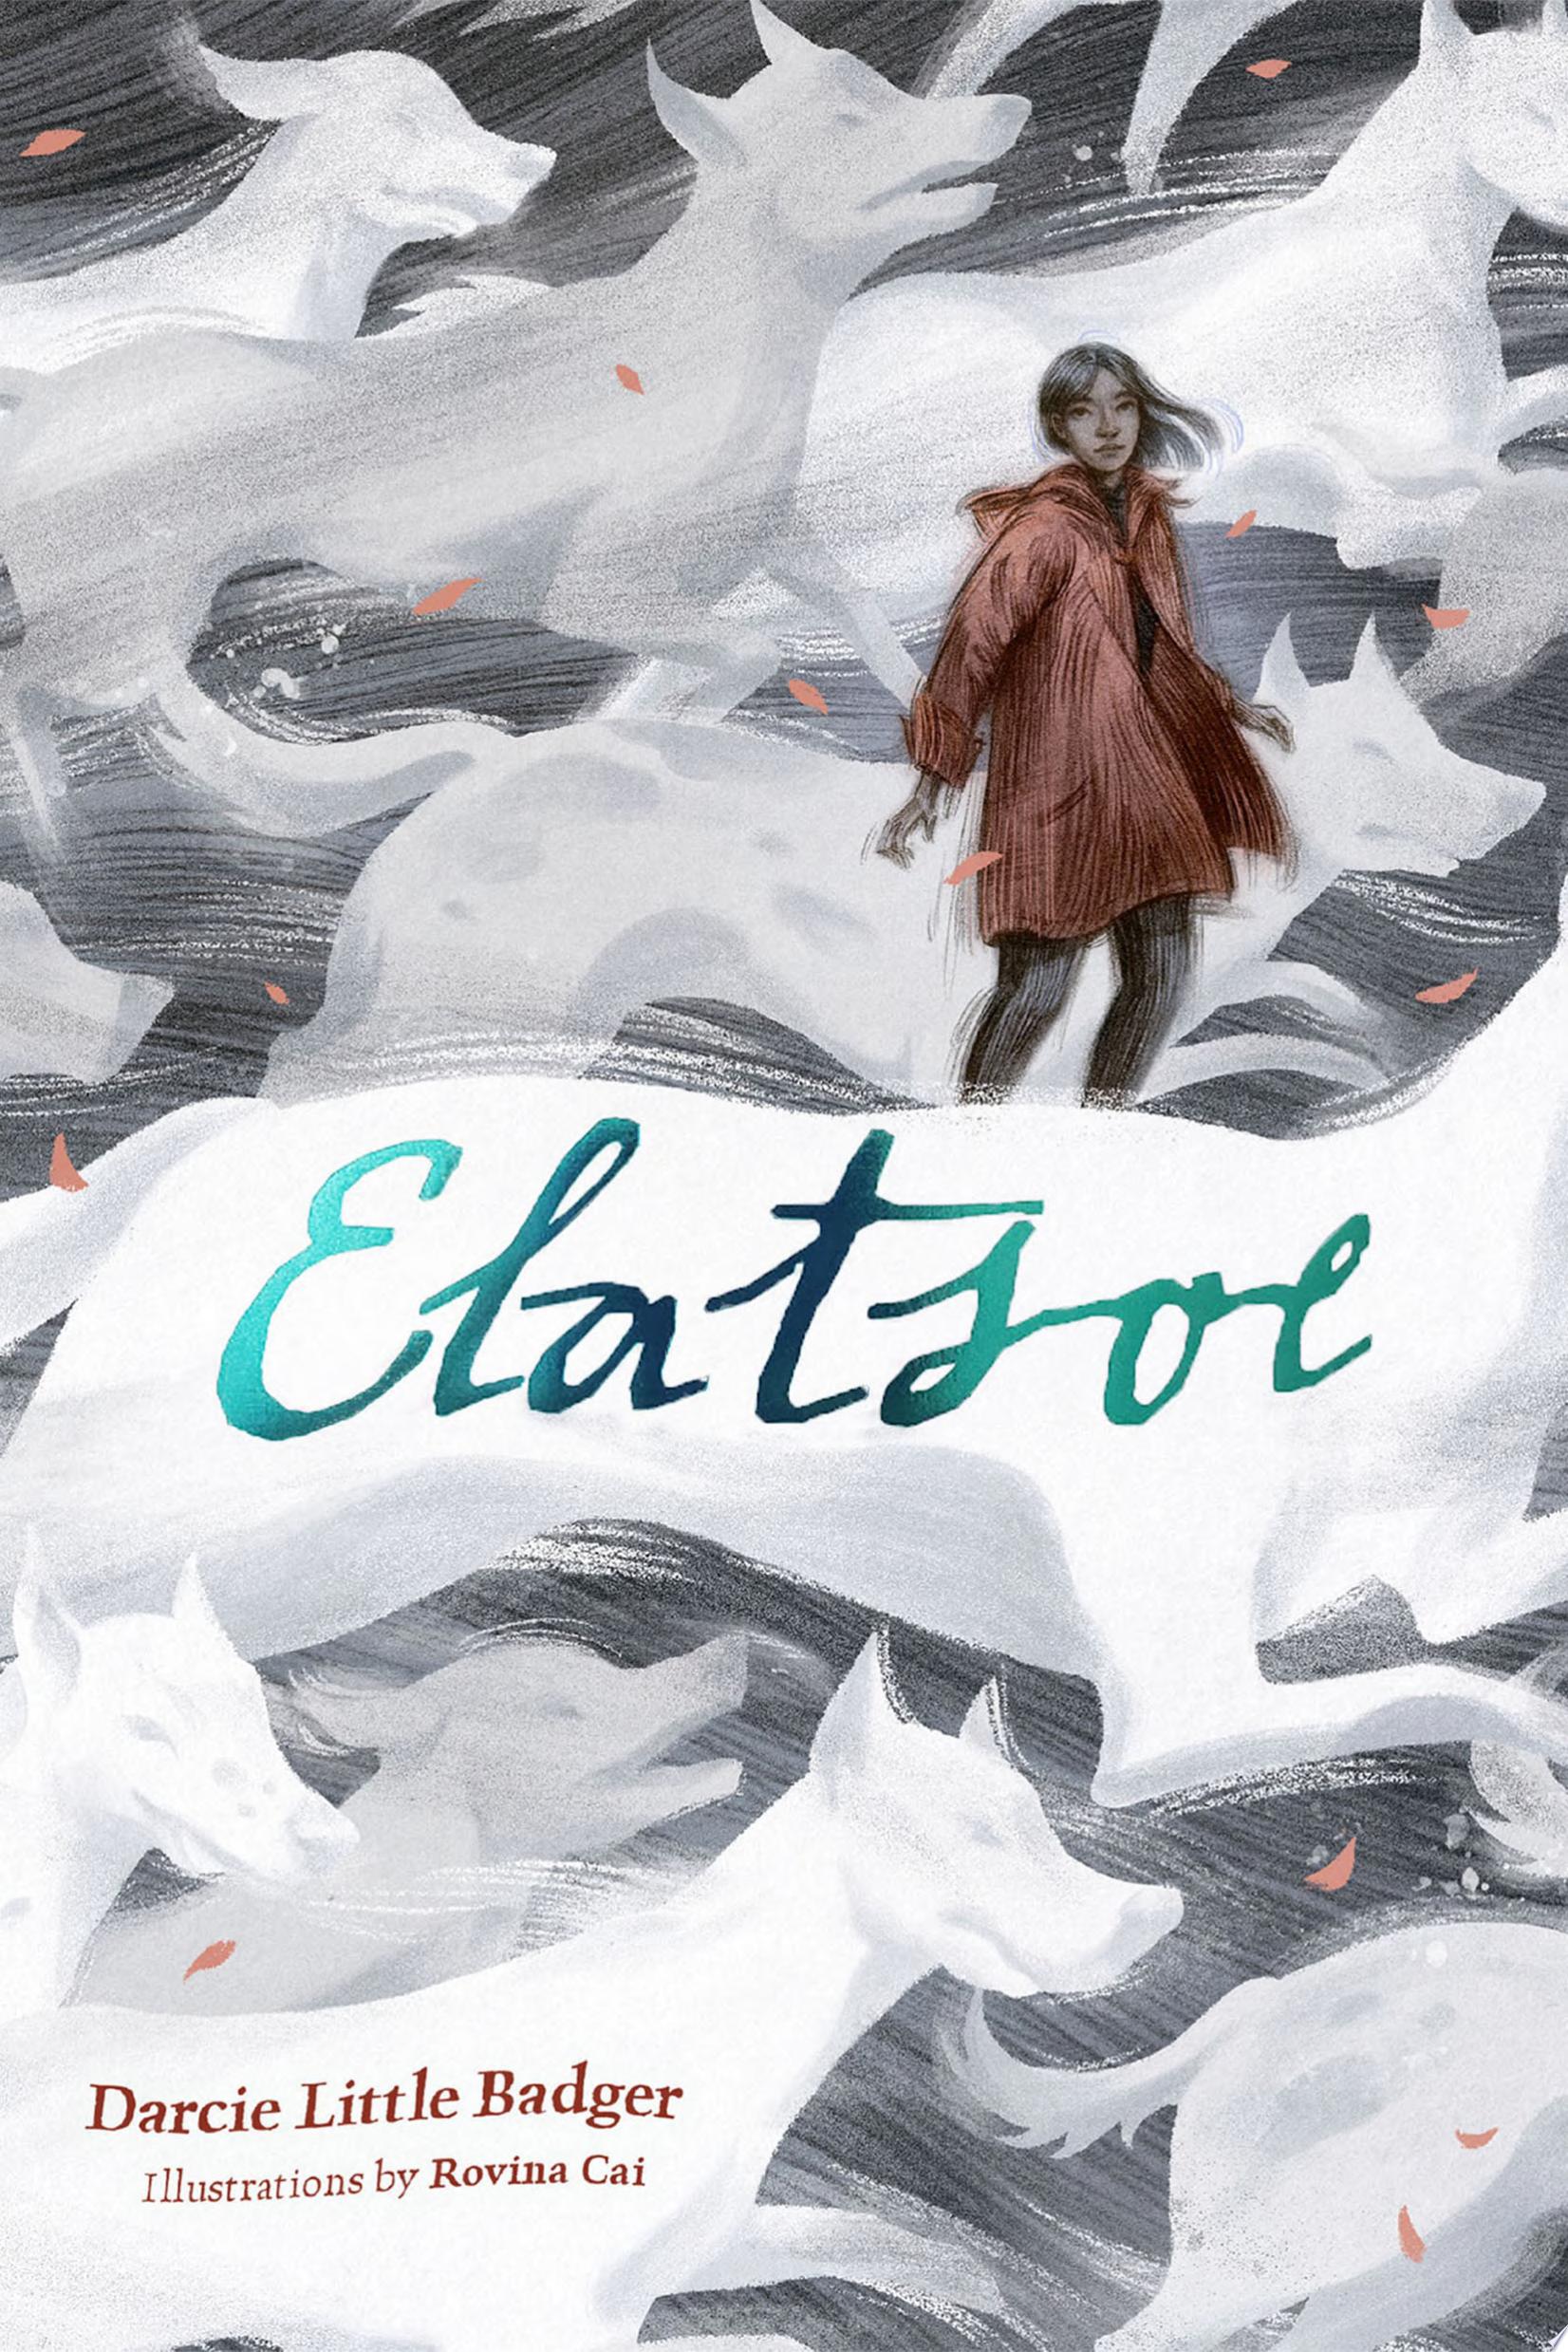 Image for "Elatsoe"